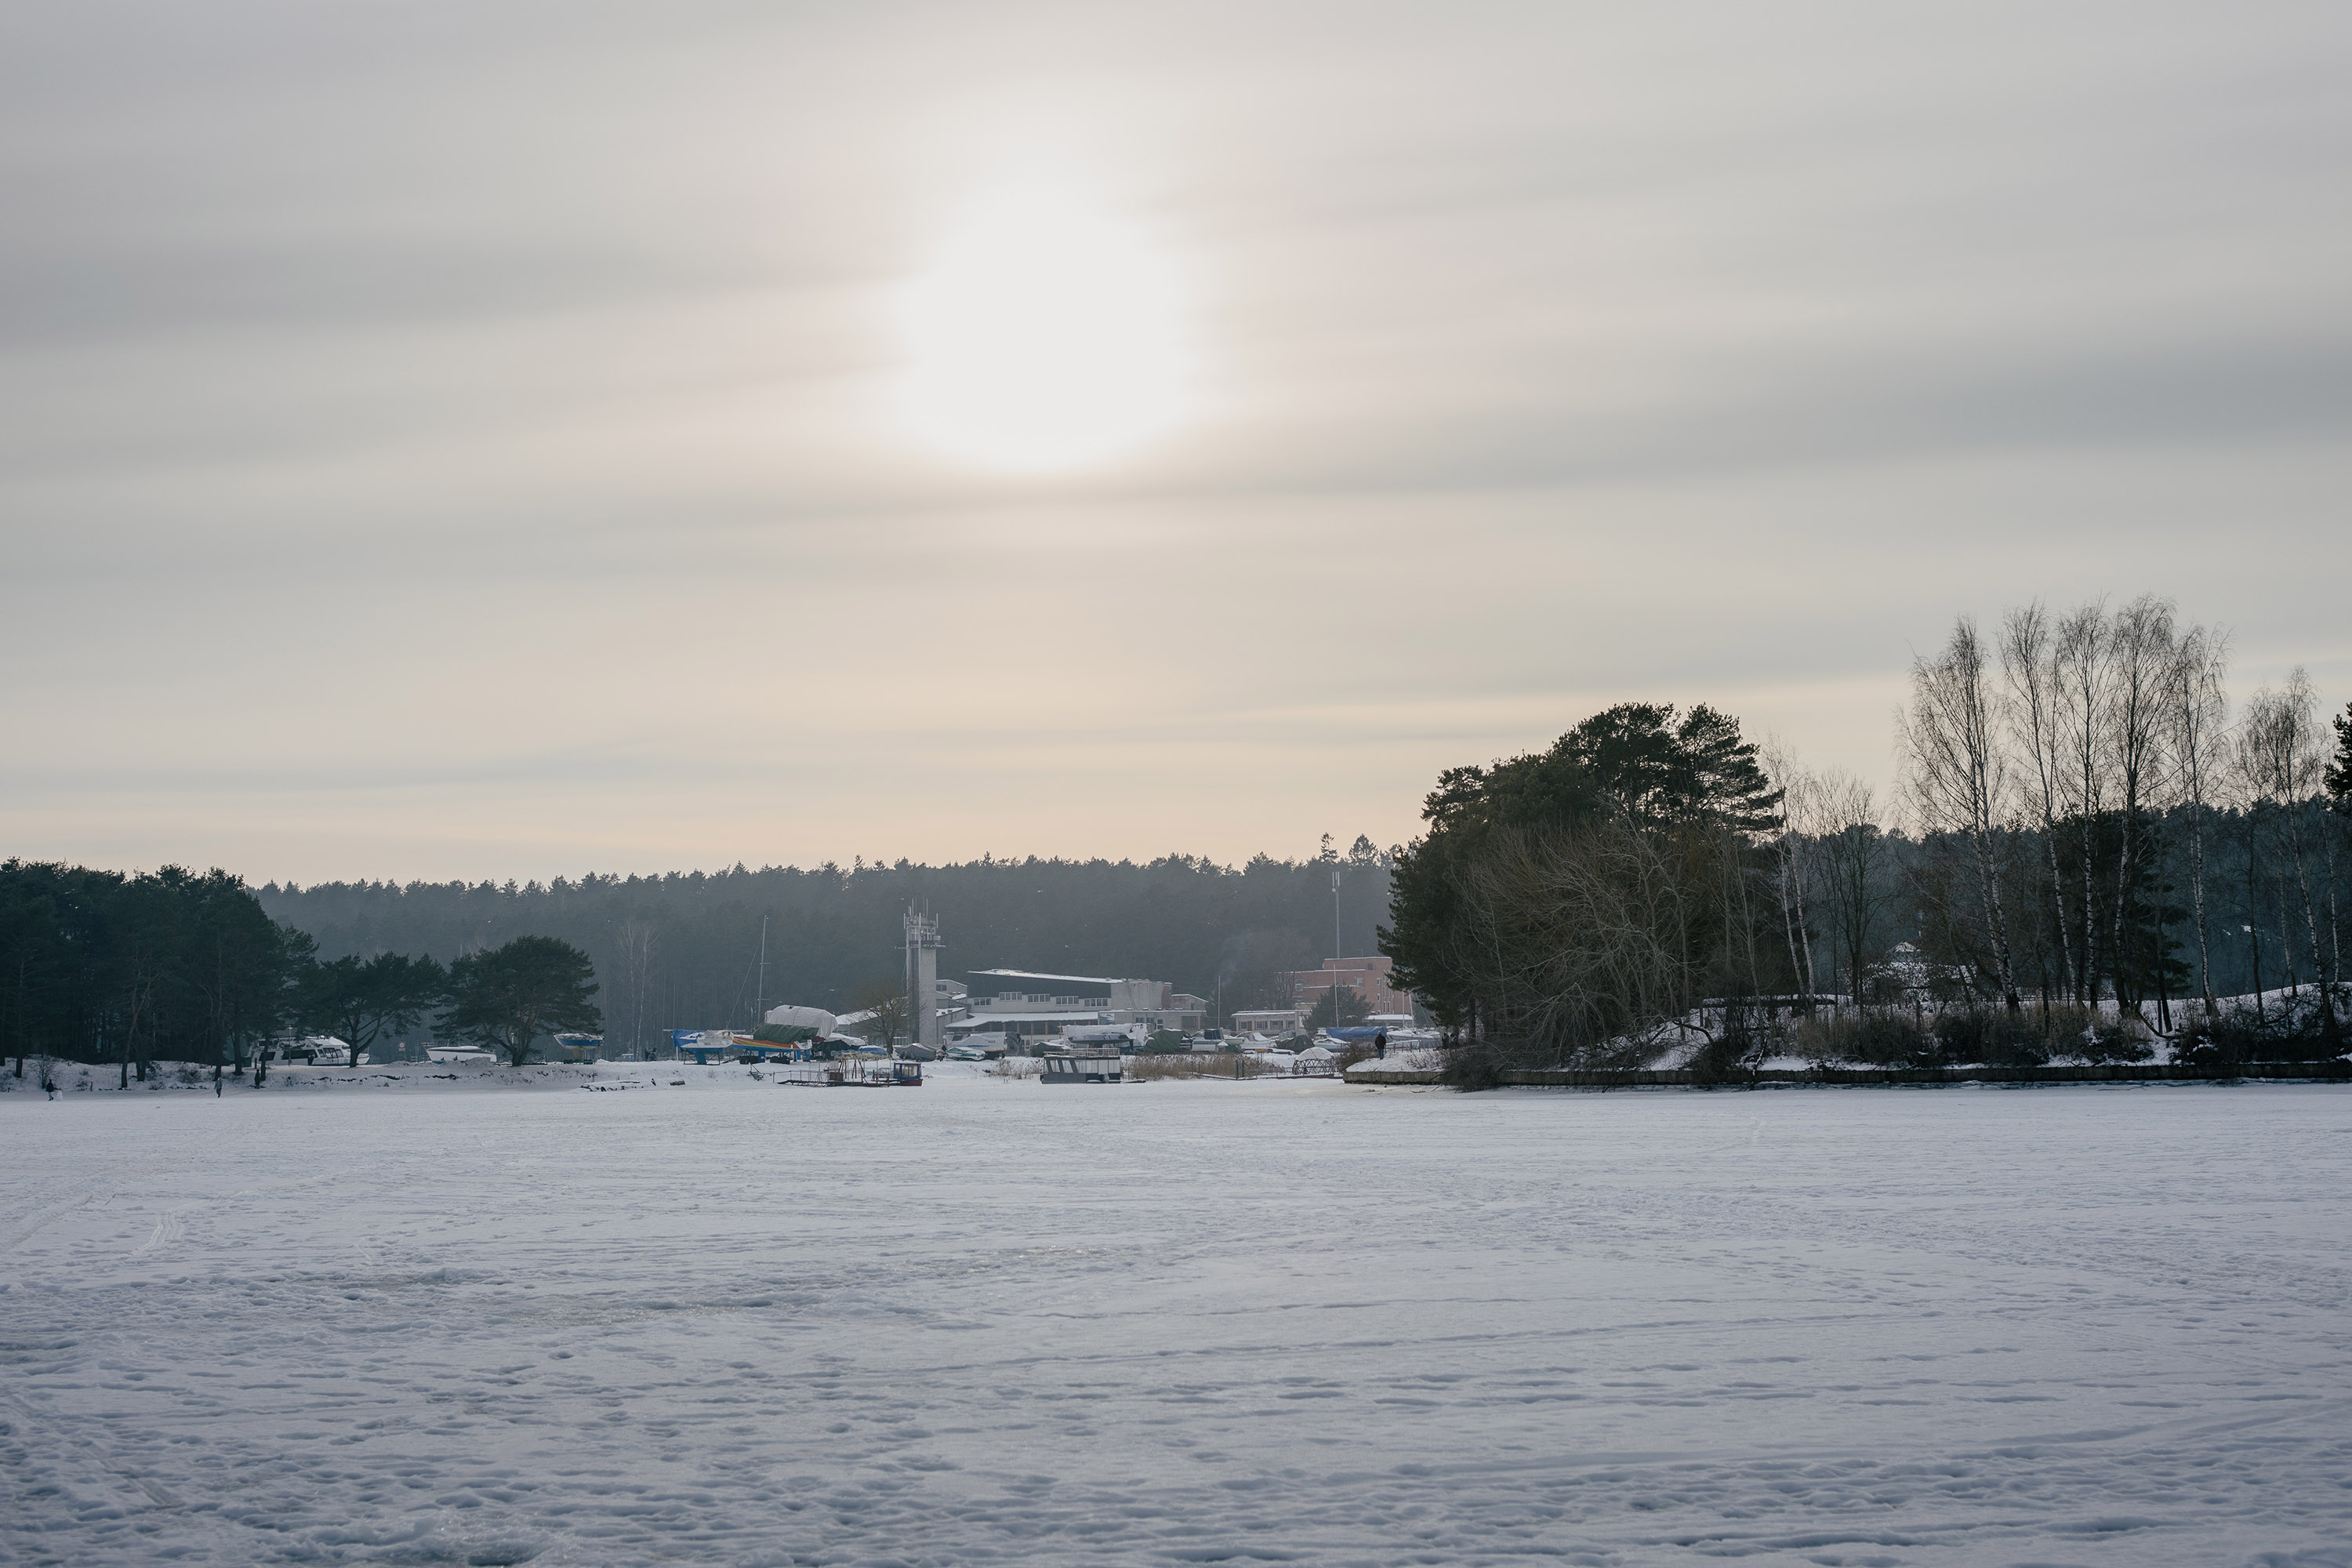 Kaunas yacht club freezes over during winter - Carl Zeiss Contarex 50mm f2